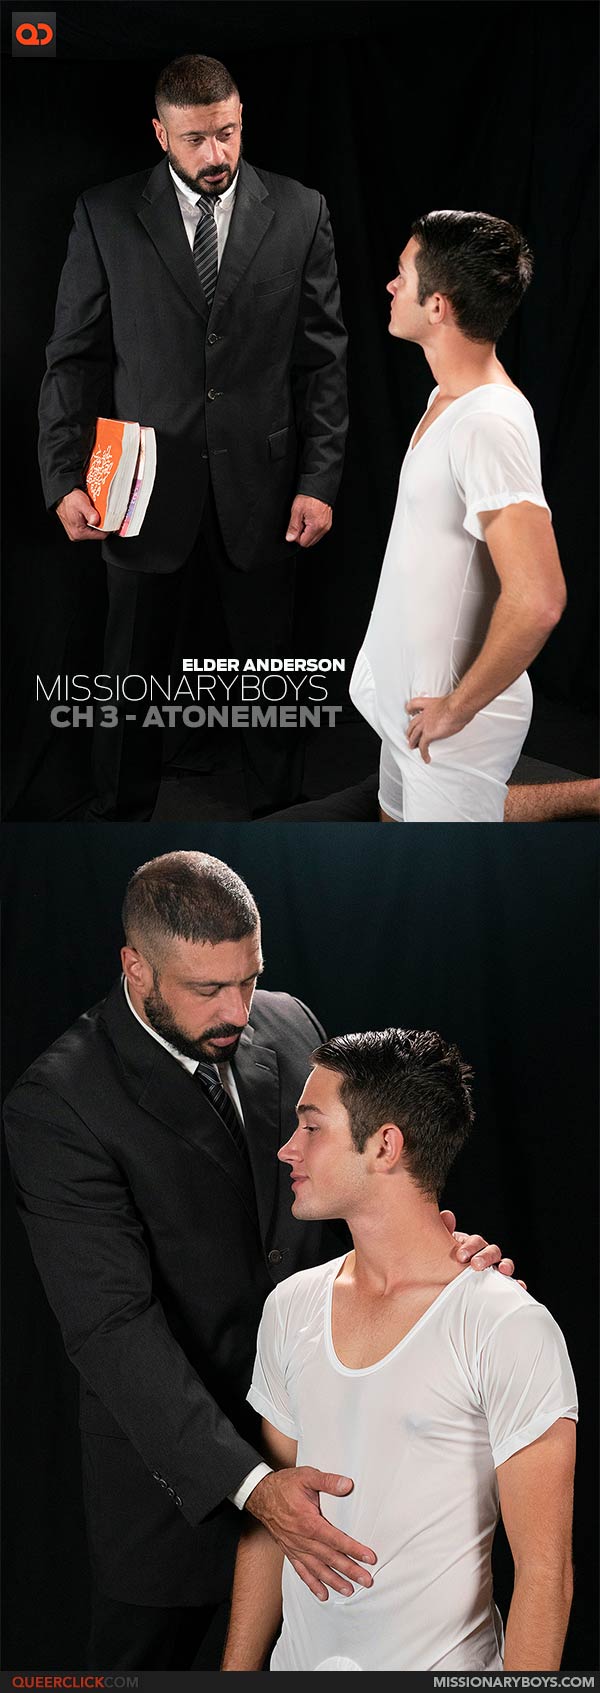 MissionaryBoys: Elder Anderson Ch 3 - Atonement